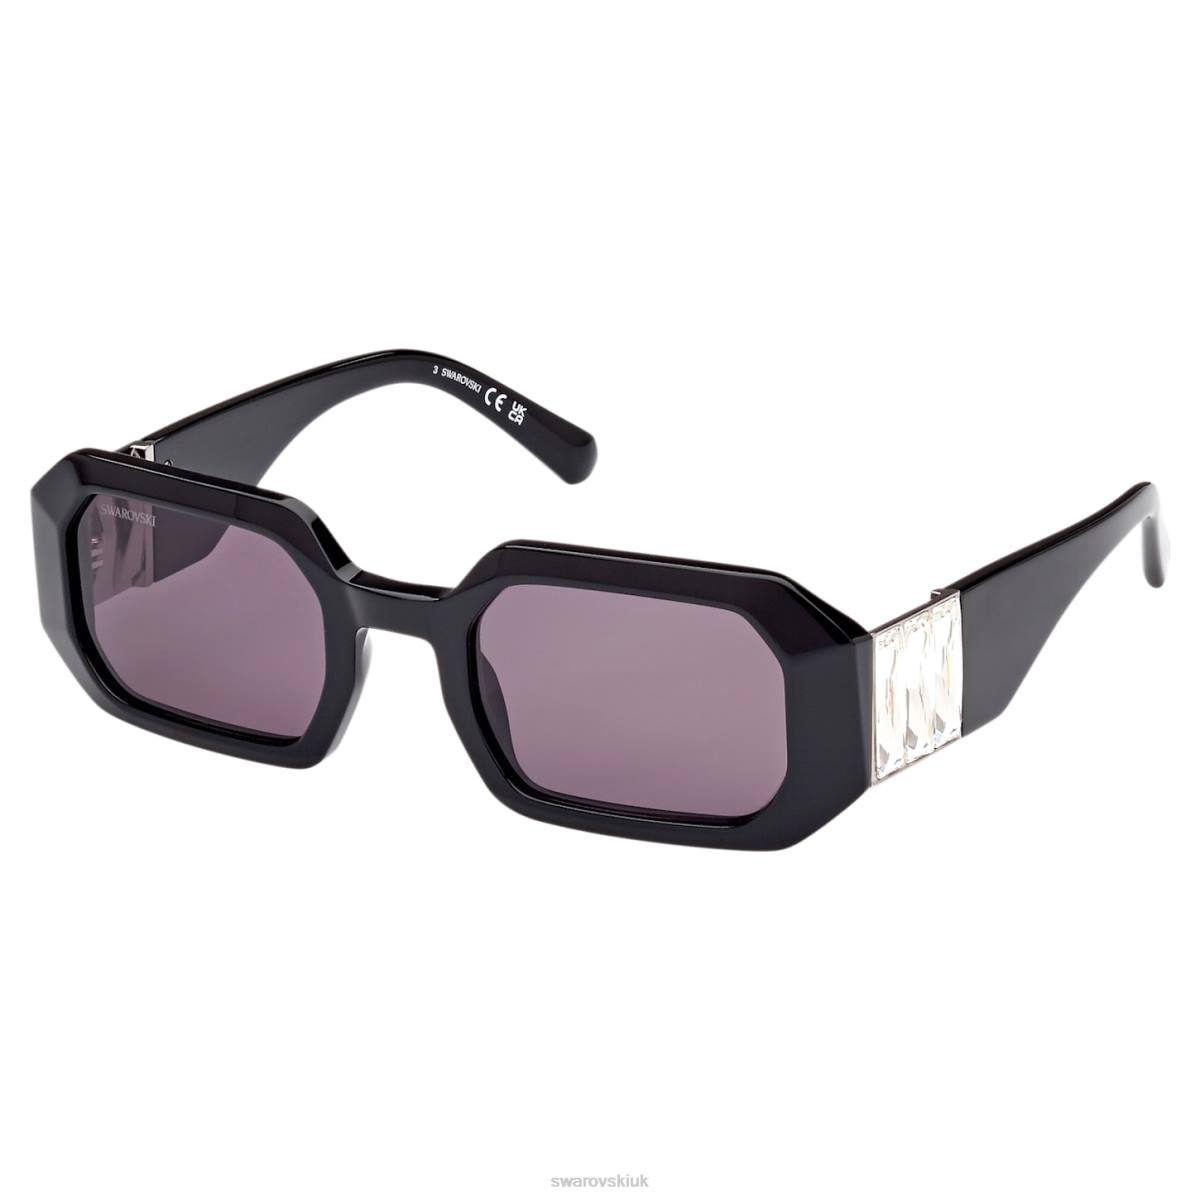 Accessories Swarovski Sunglasses Octagon shape SK0387 01A, Black 48JX1442